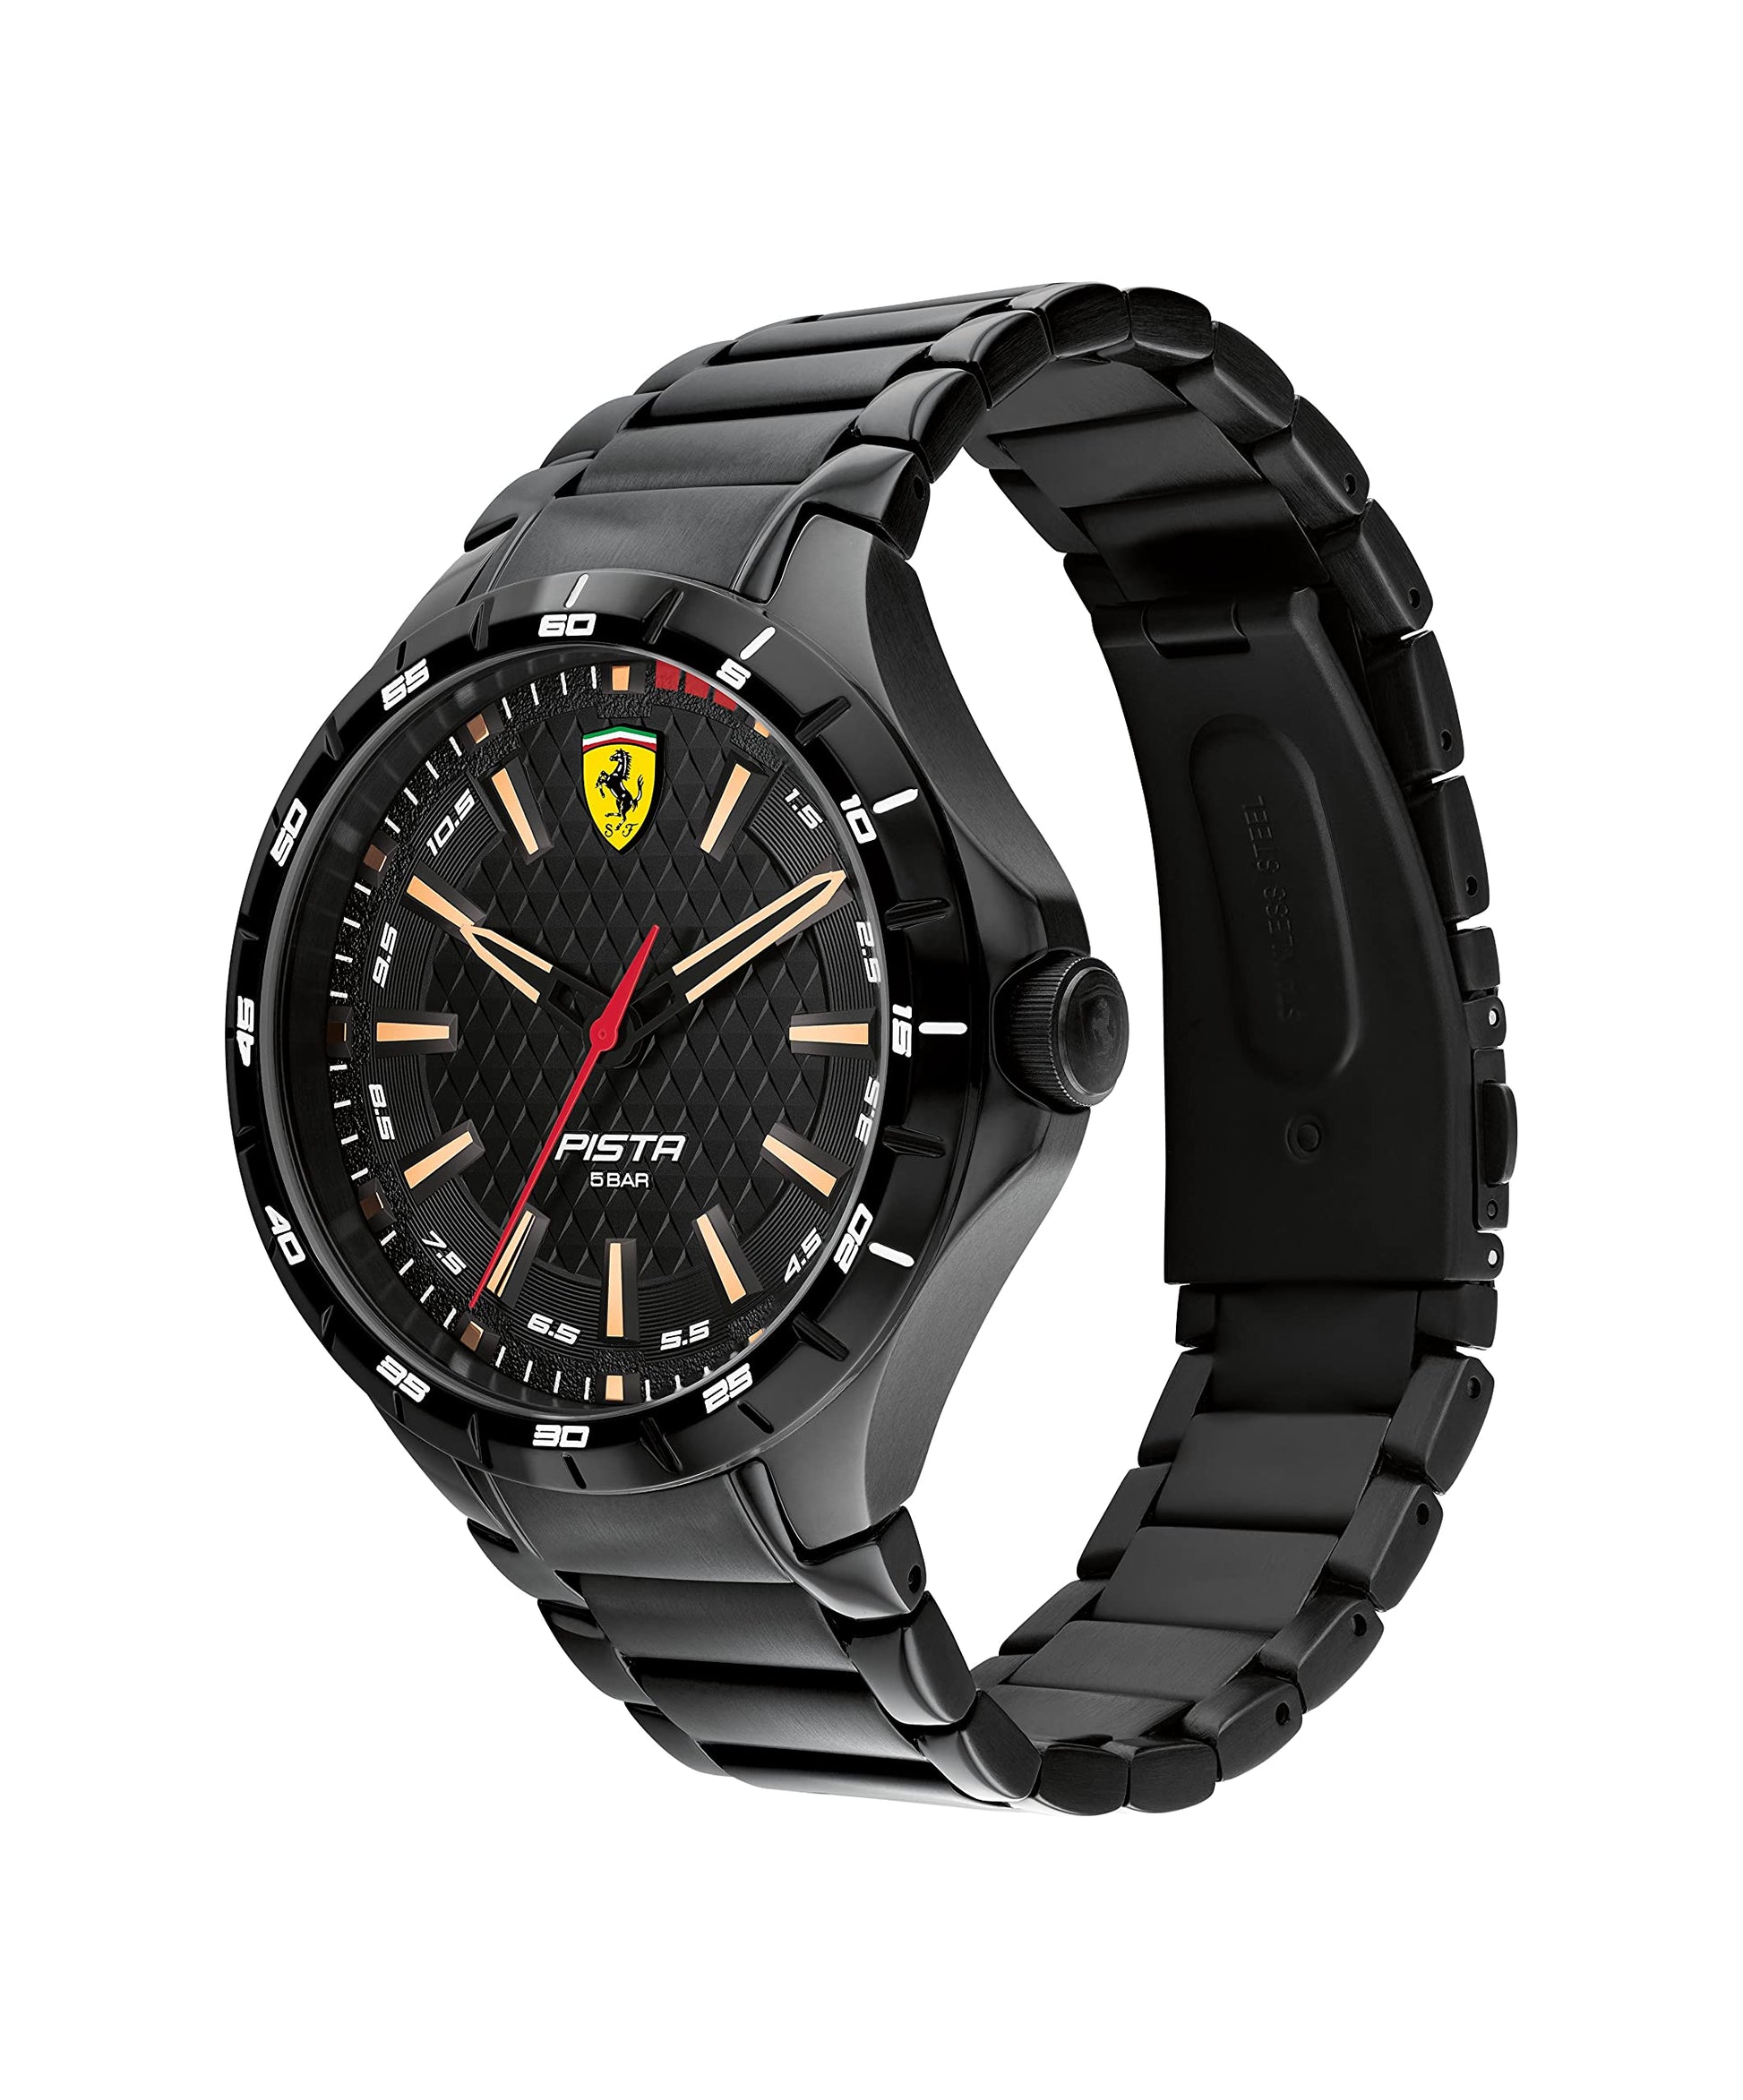 Ferrari Scuderia Pista Men's Quartz Stainless Steel and Link Bracelet Watch, Color: Black (Model: 0830866), Silver, Modern Phil and Gazelle